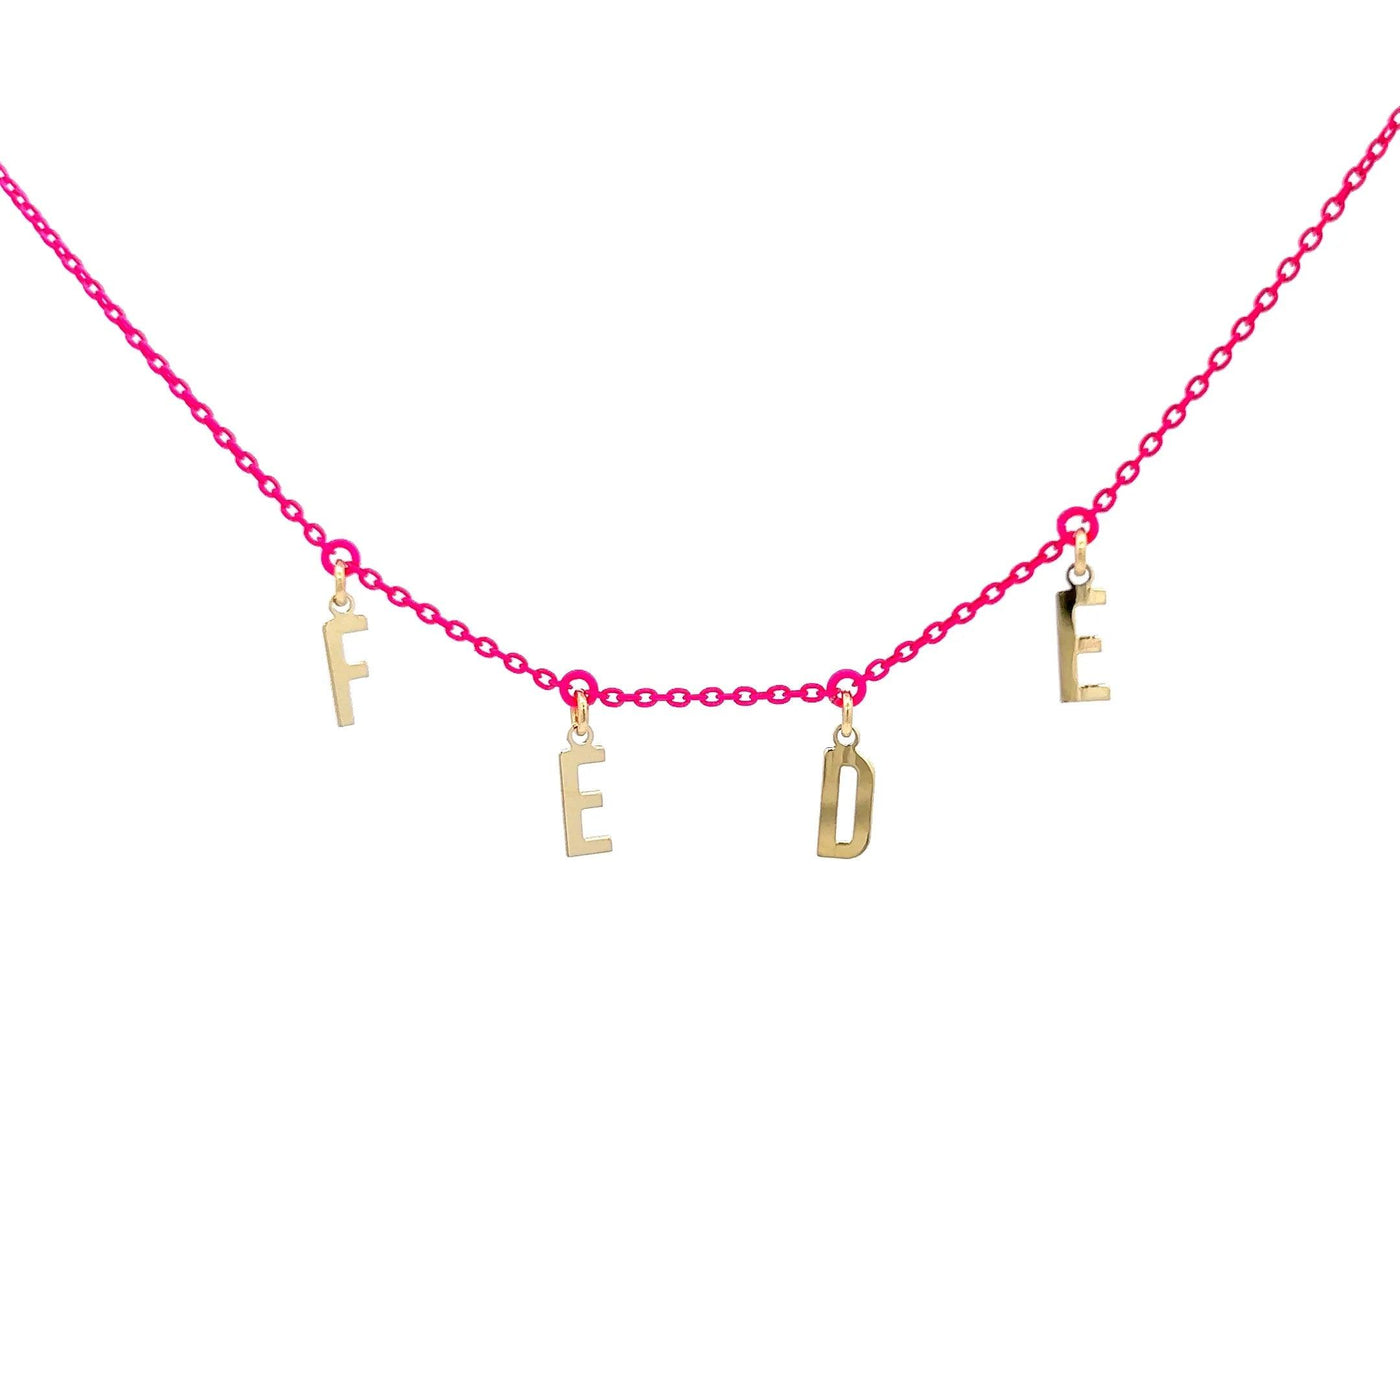 Customizable Fuchsia Choker with Golden Letters - Moregola Fine Jewelry